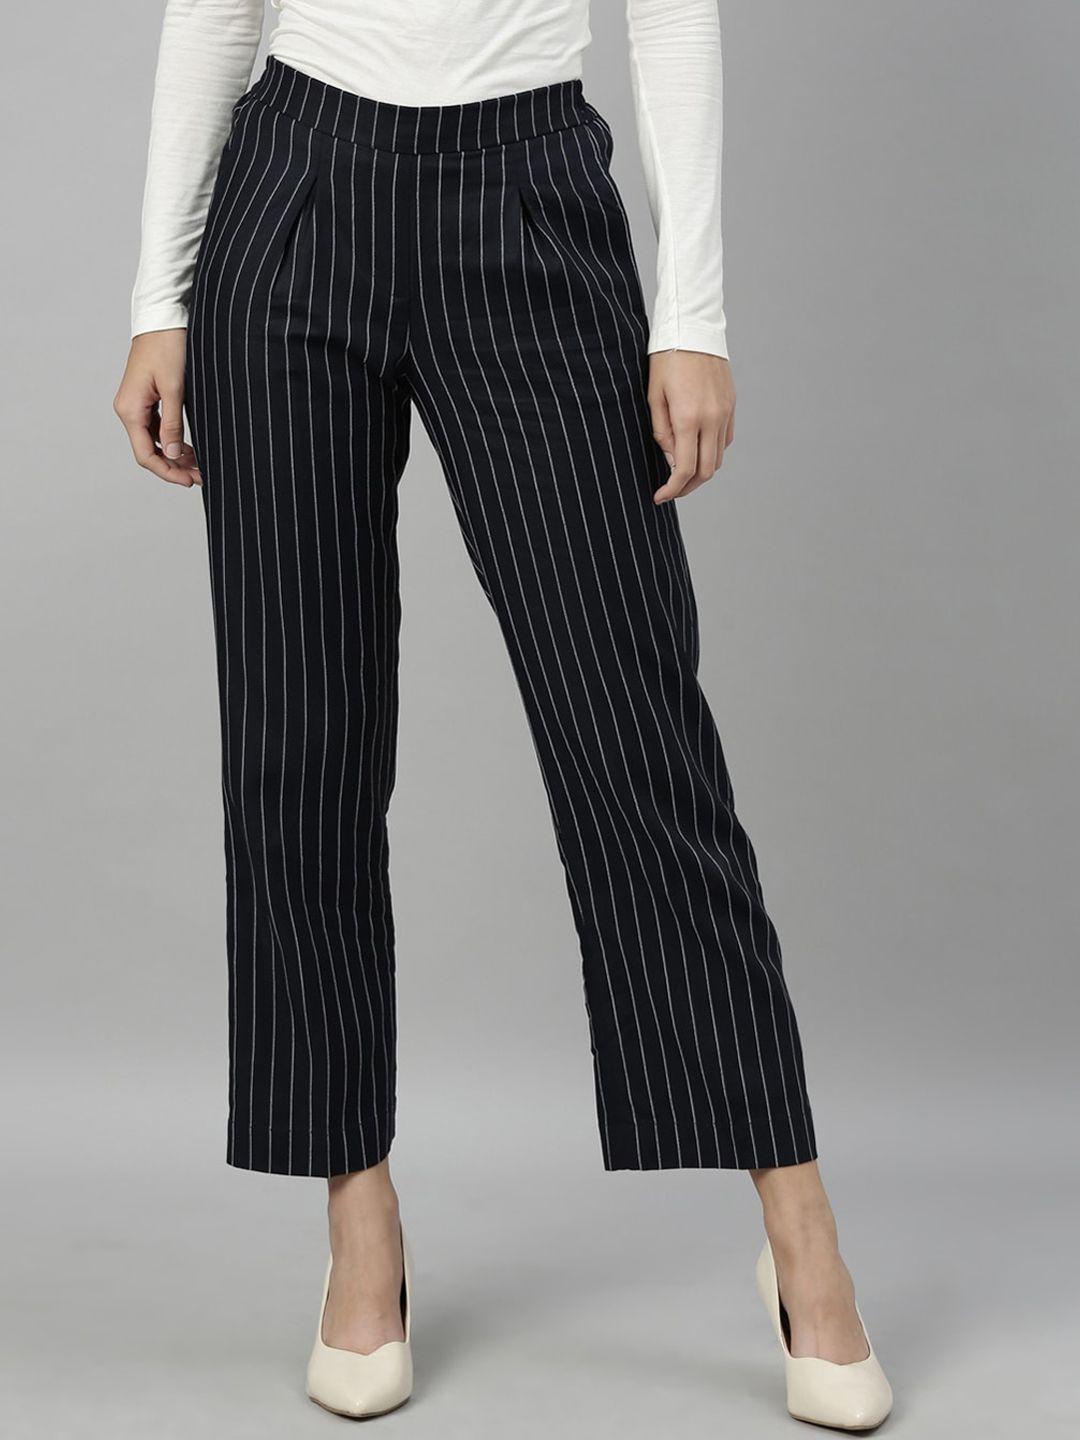 rareism women navy blue & white straight fit striped regular trousers